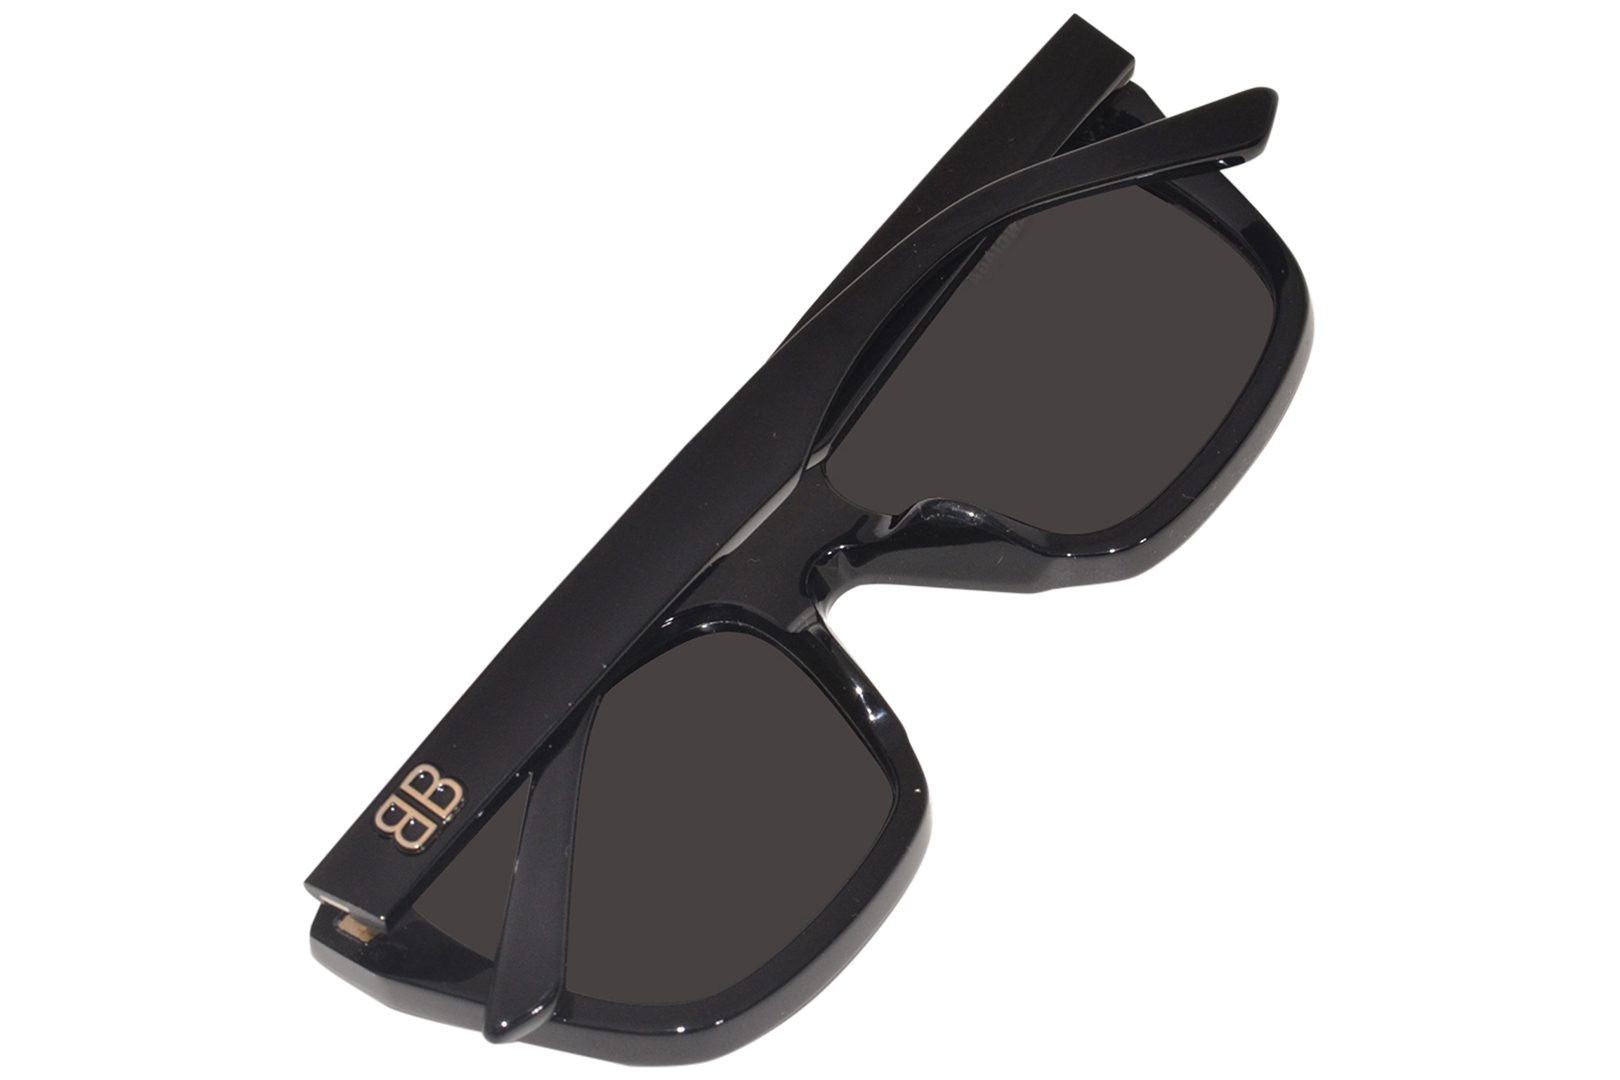 Balenciaga Women's BB0216S Sunglasses